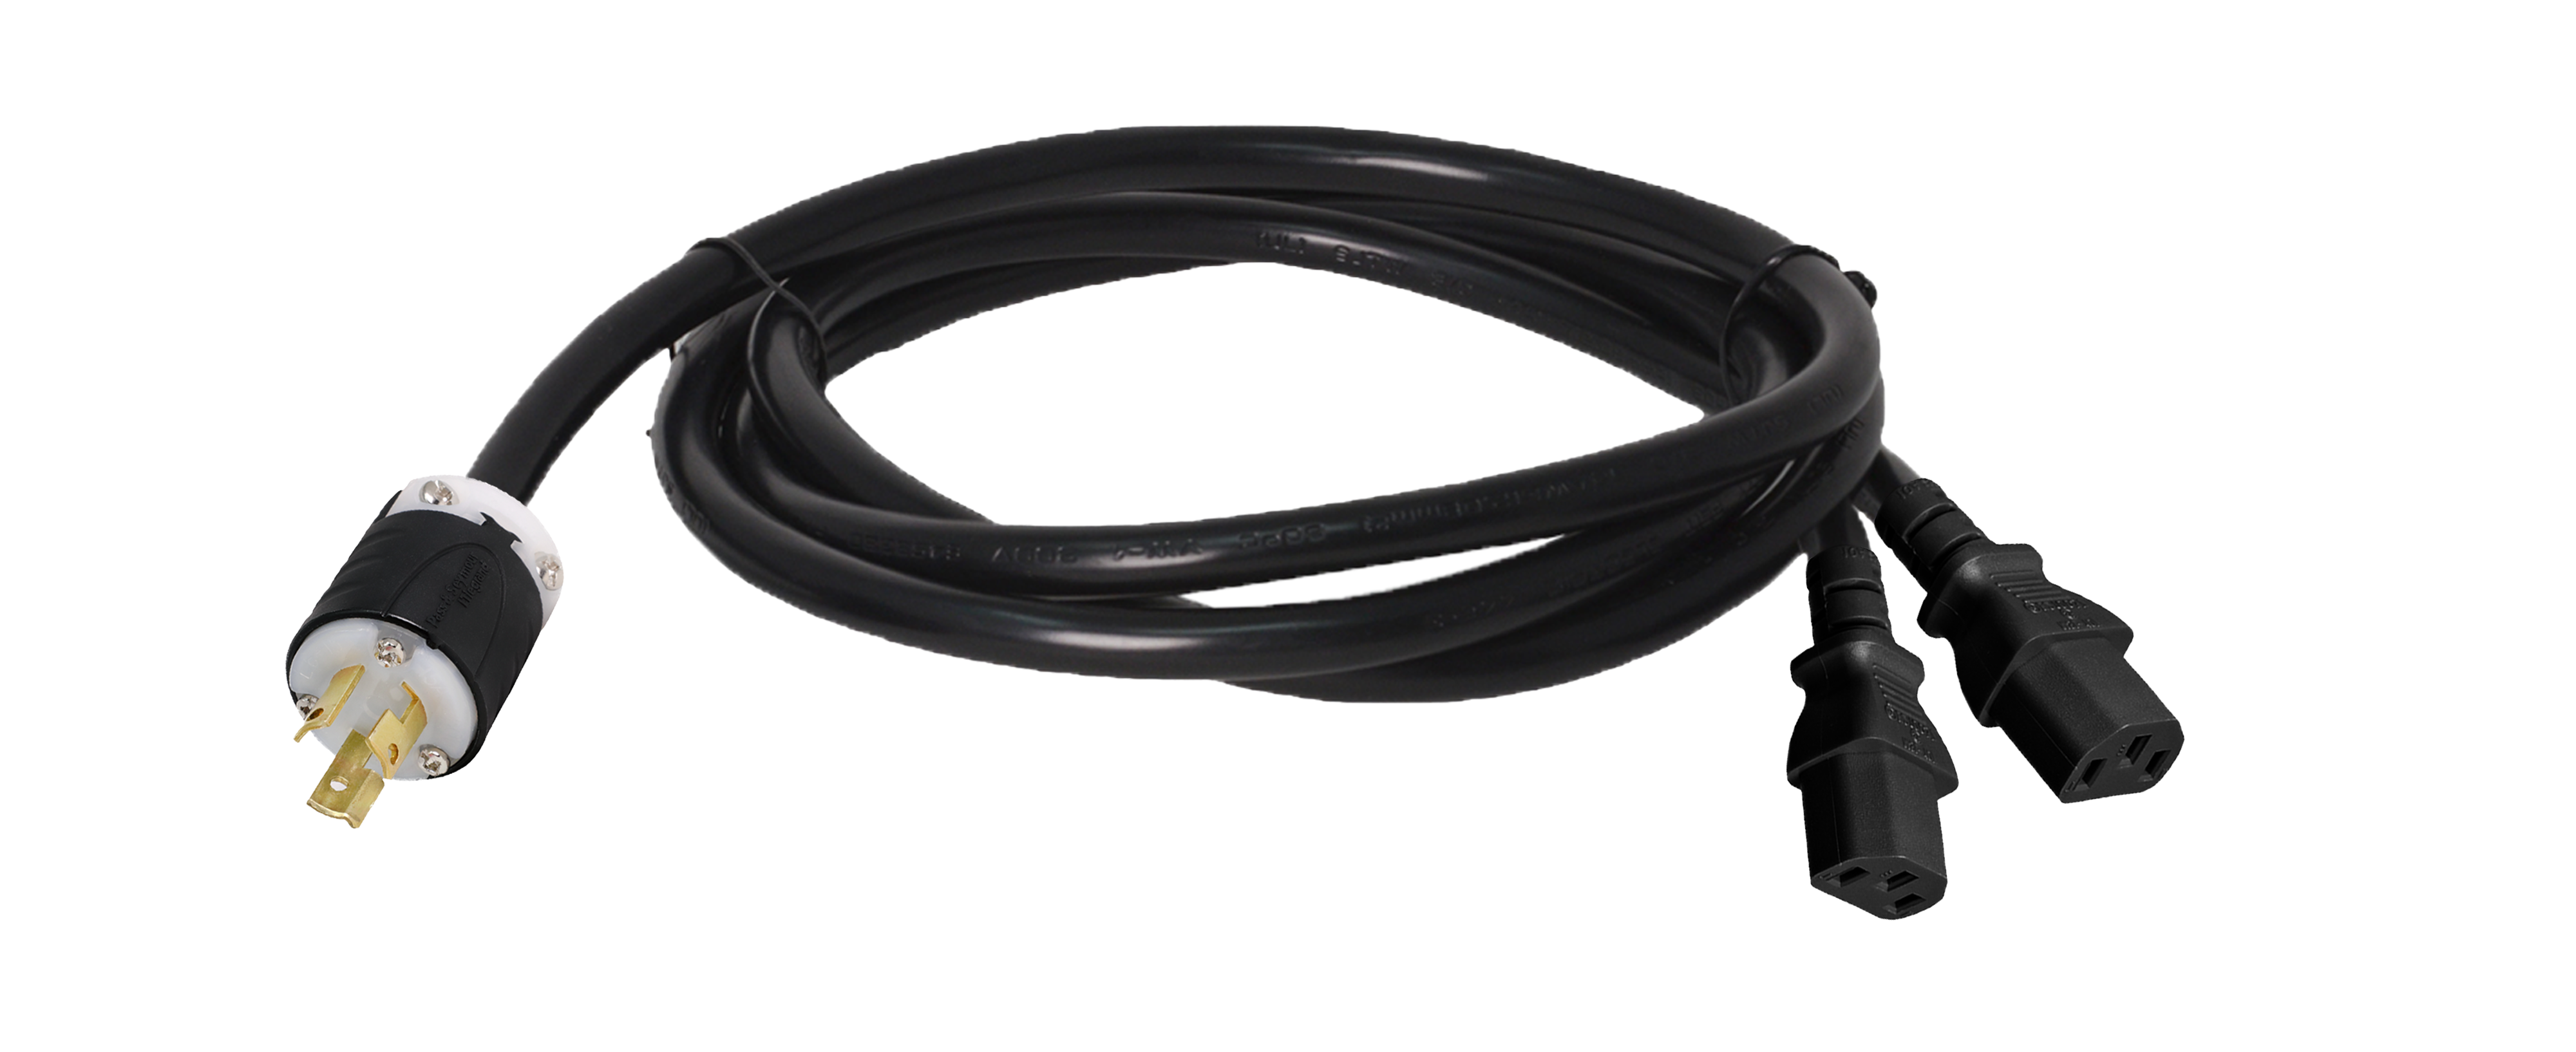 splitter power cord, l5-15 c13